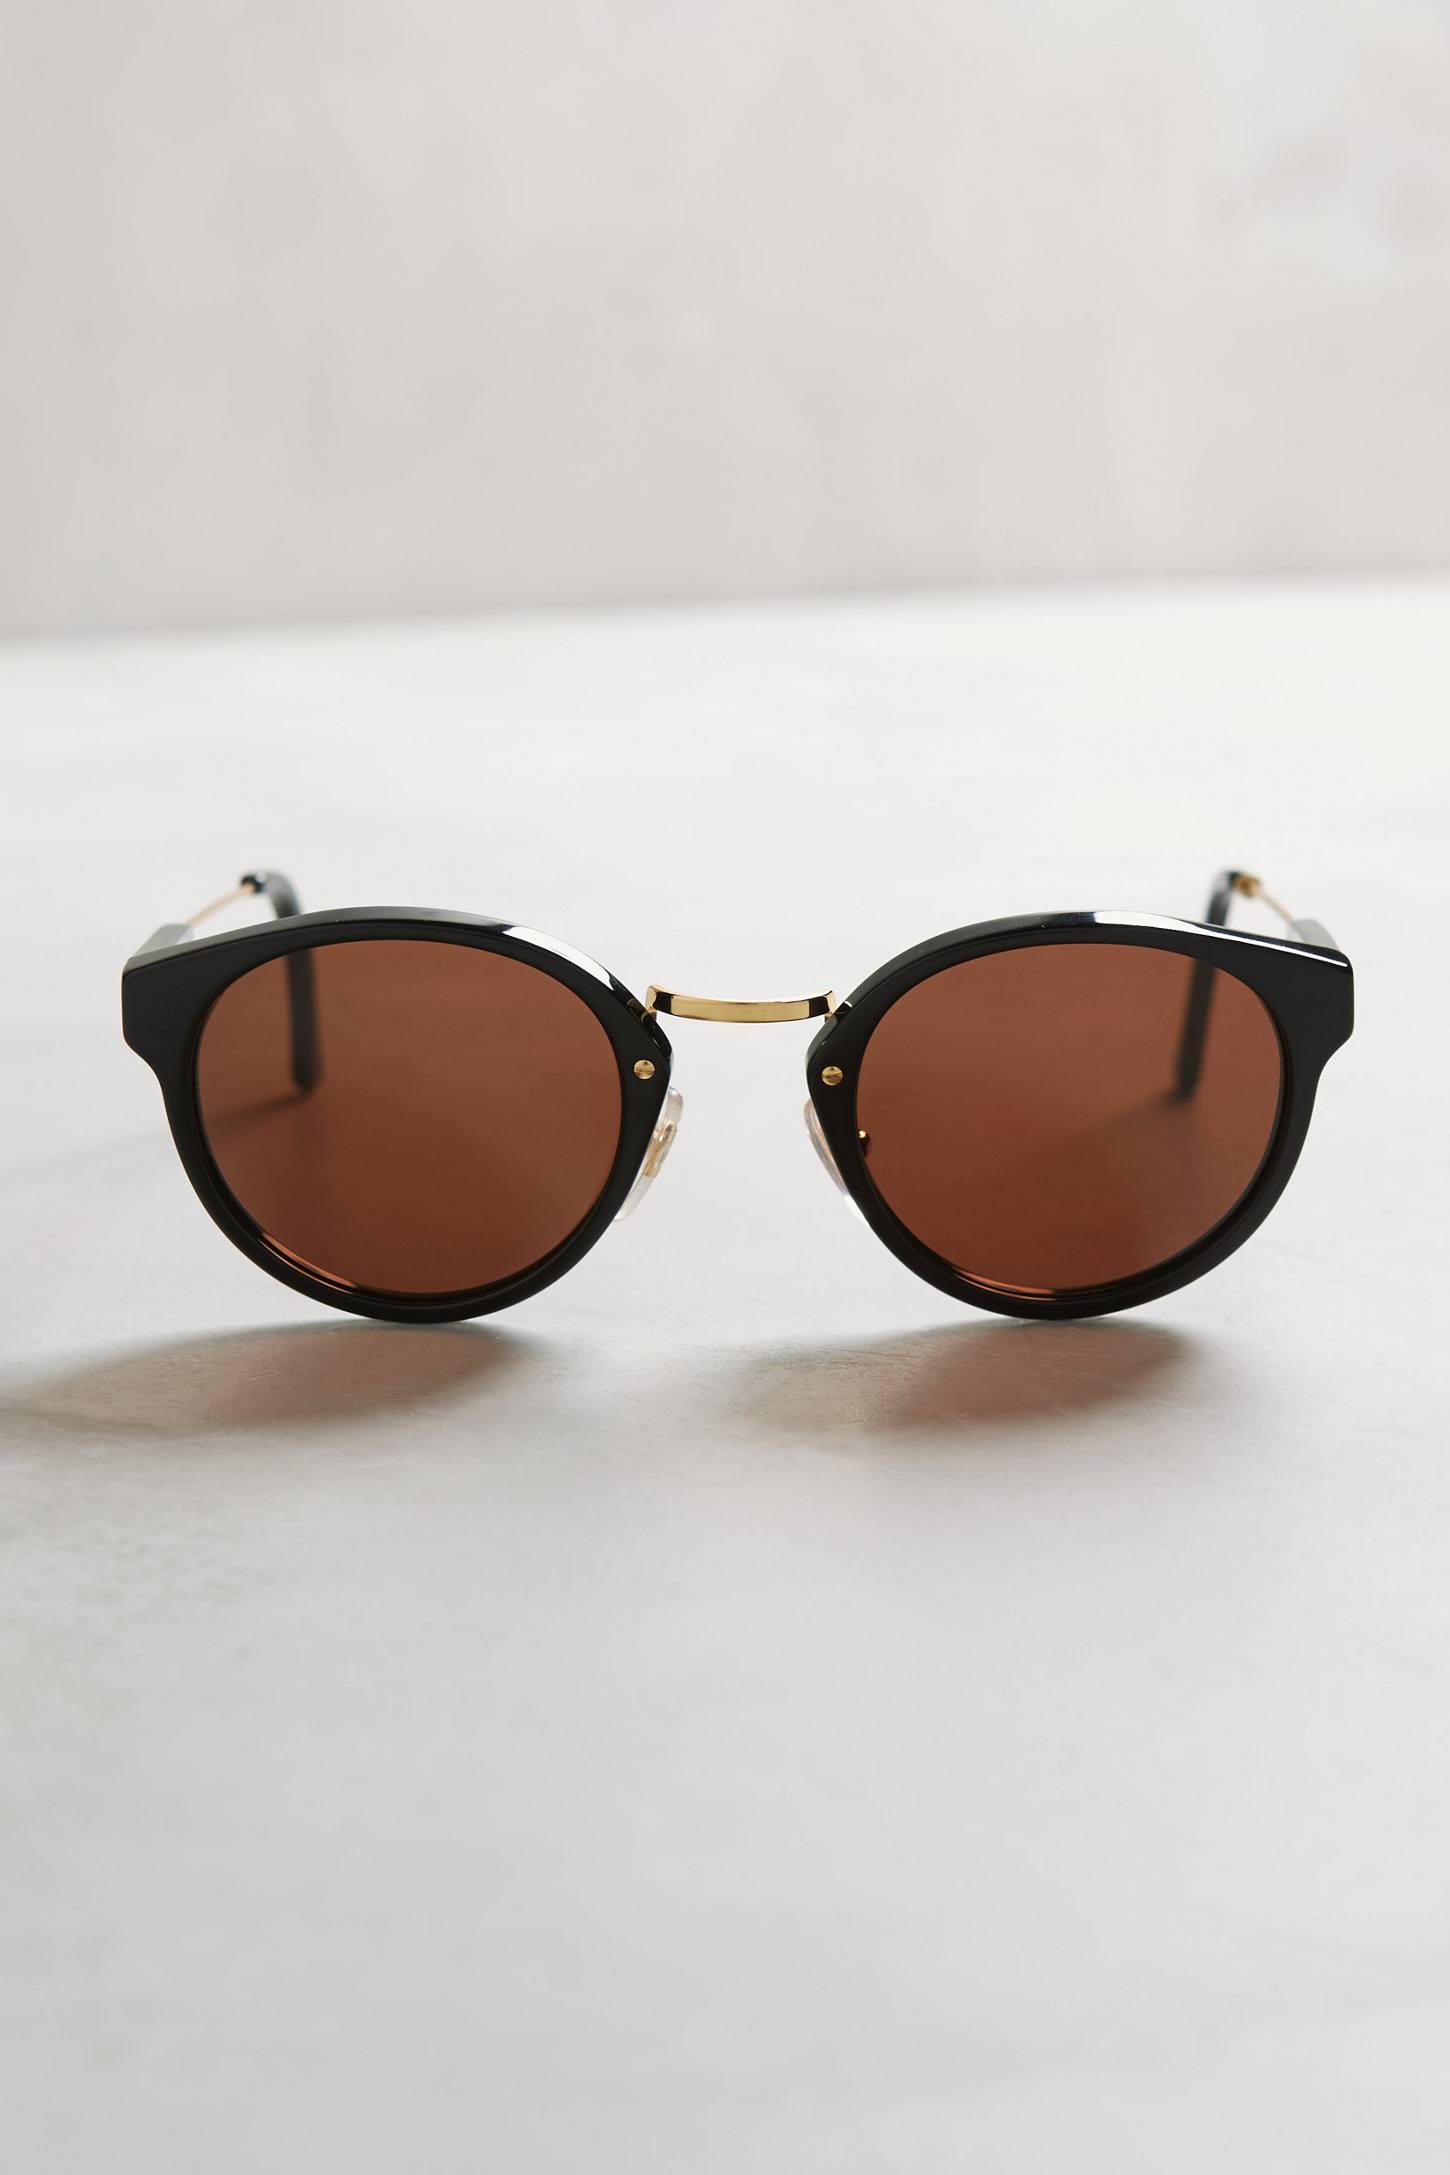 Panama Sunglasses by Super by Retrosuperfuture